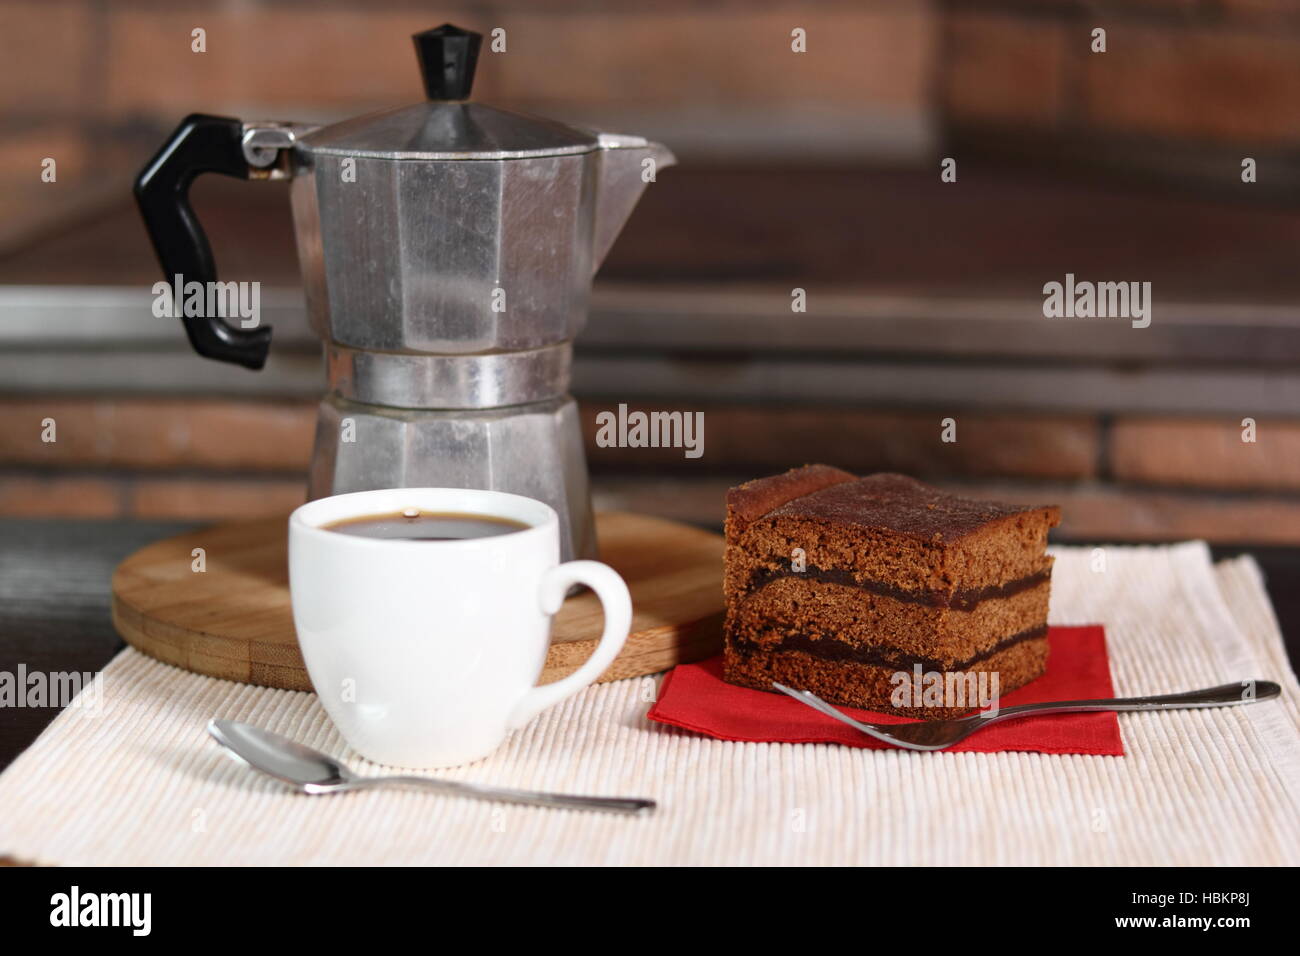 https://c8.alamy.com/comp/HBKP8J/moka-pot-coffee-cup-and-gingerbread-layer-cake-with-jam-HBKP8J.jpg